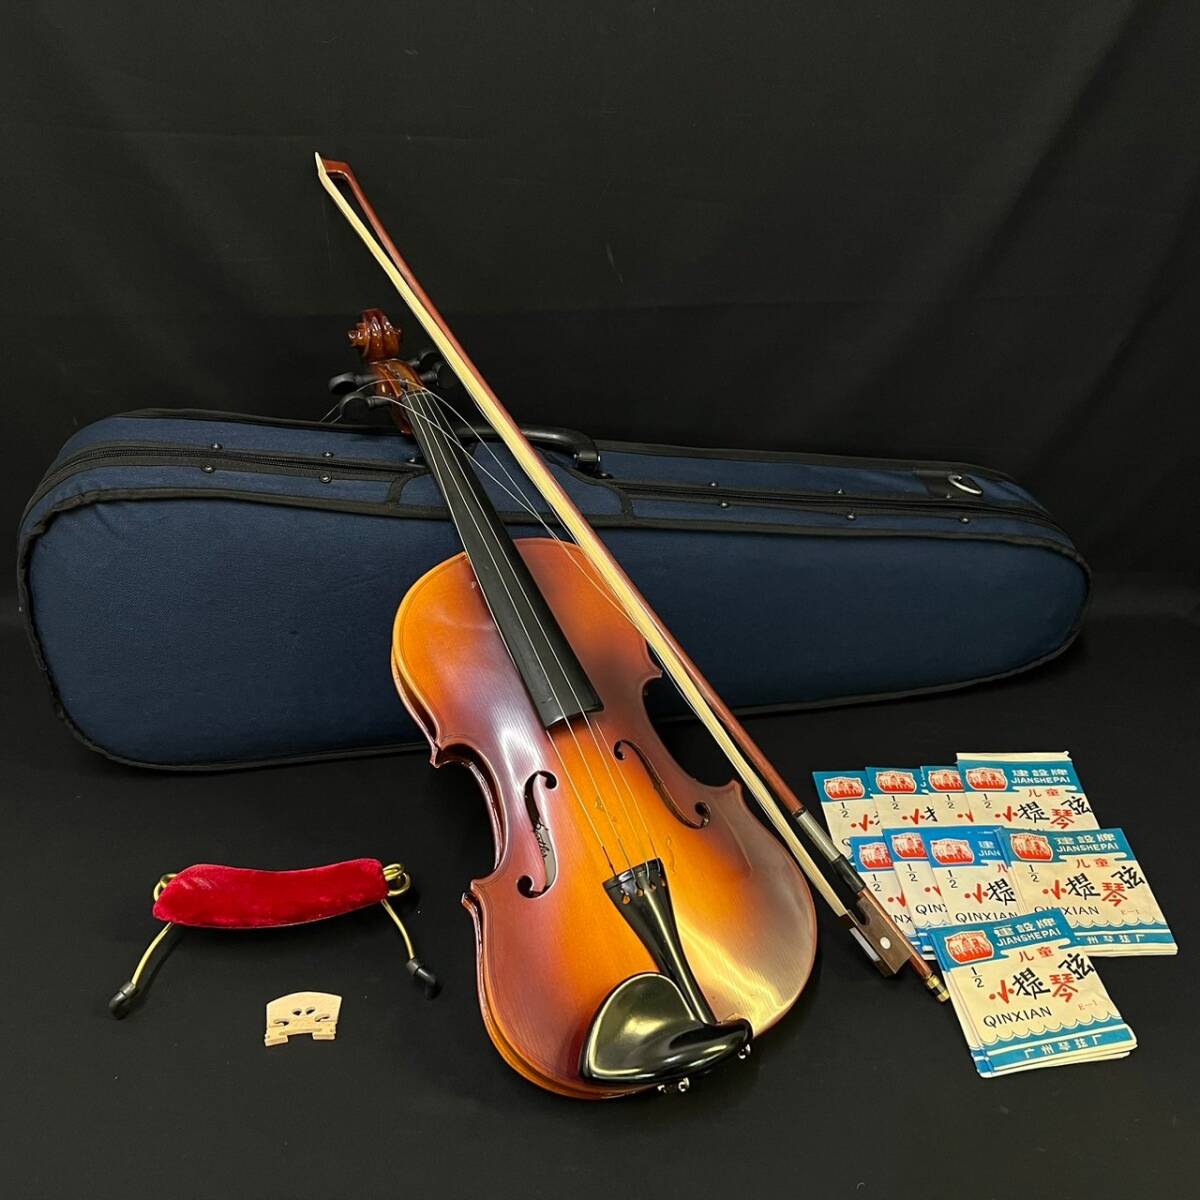 BCg311I 120 Bestler ベスラー ヴァイオリン 上海 中国 茶色 ハードケース 弓 あご当て 付 バイオリン 弦楽器 楽器 Shanghai_画像1